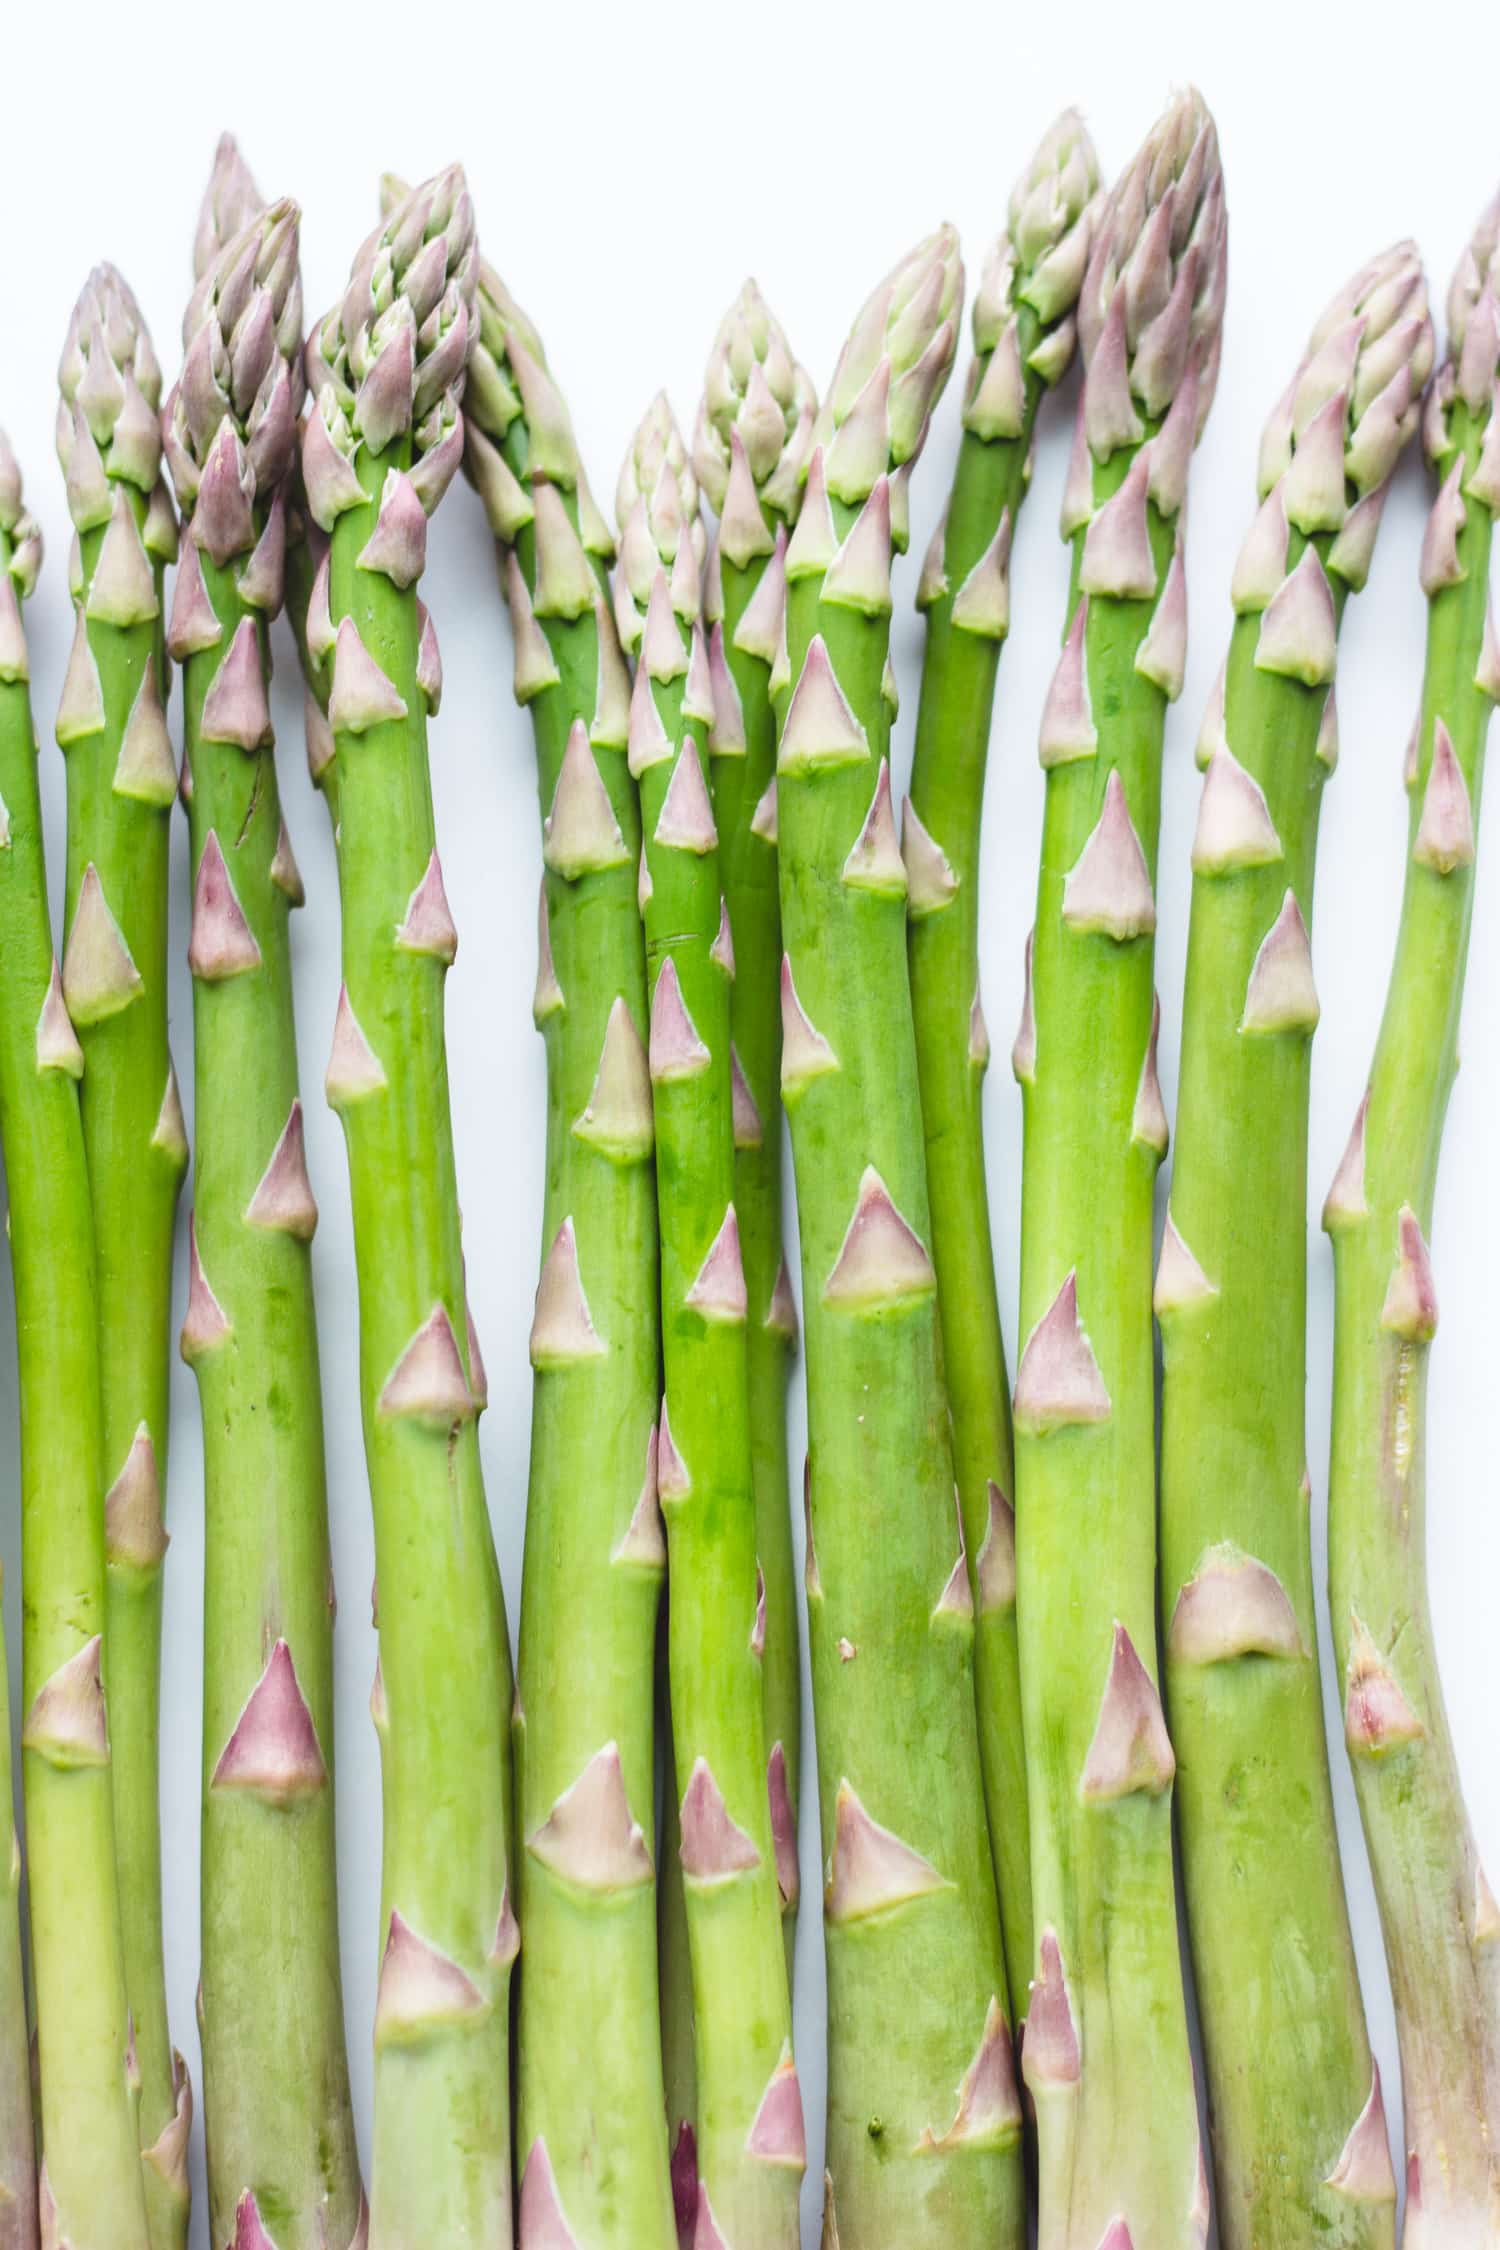 asparagus on a white surface